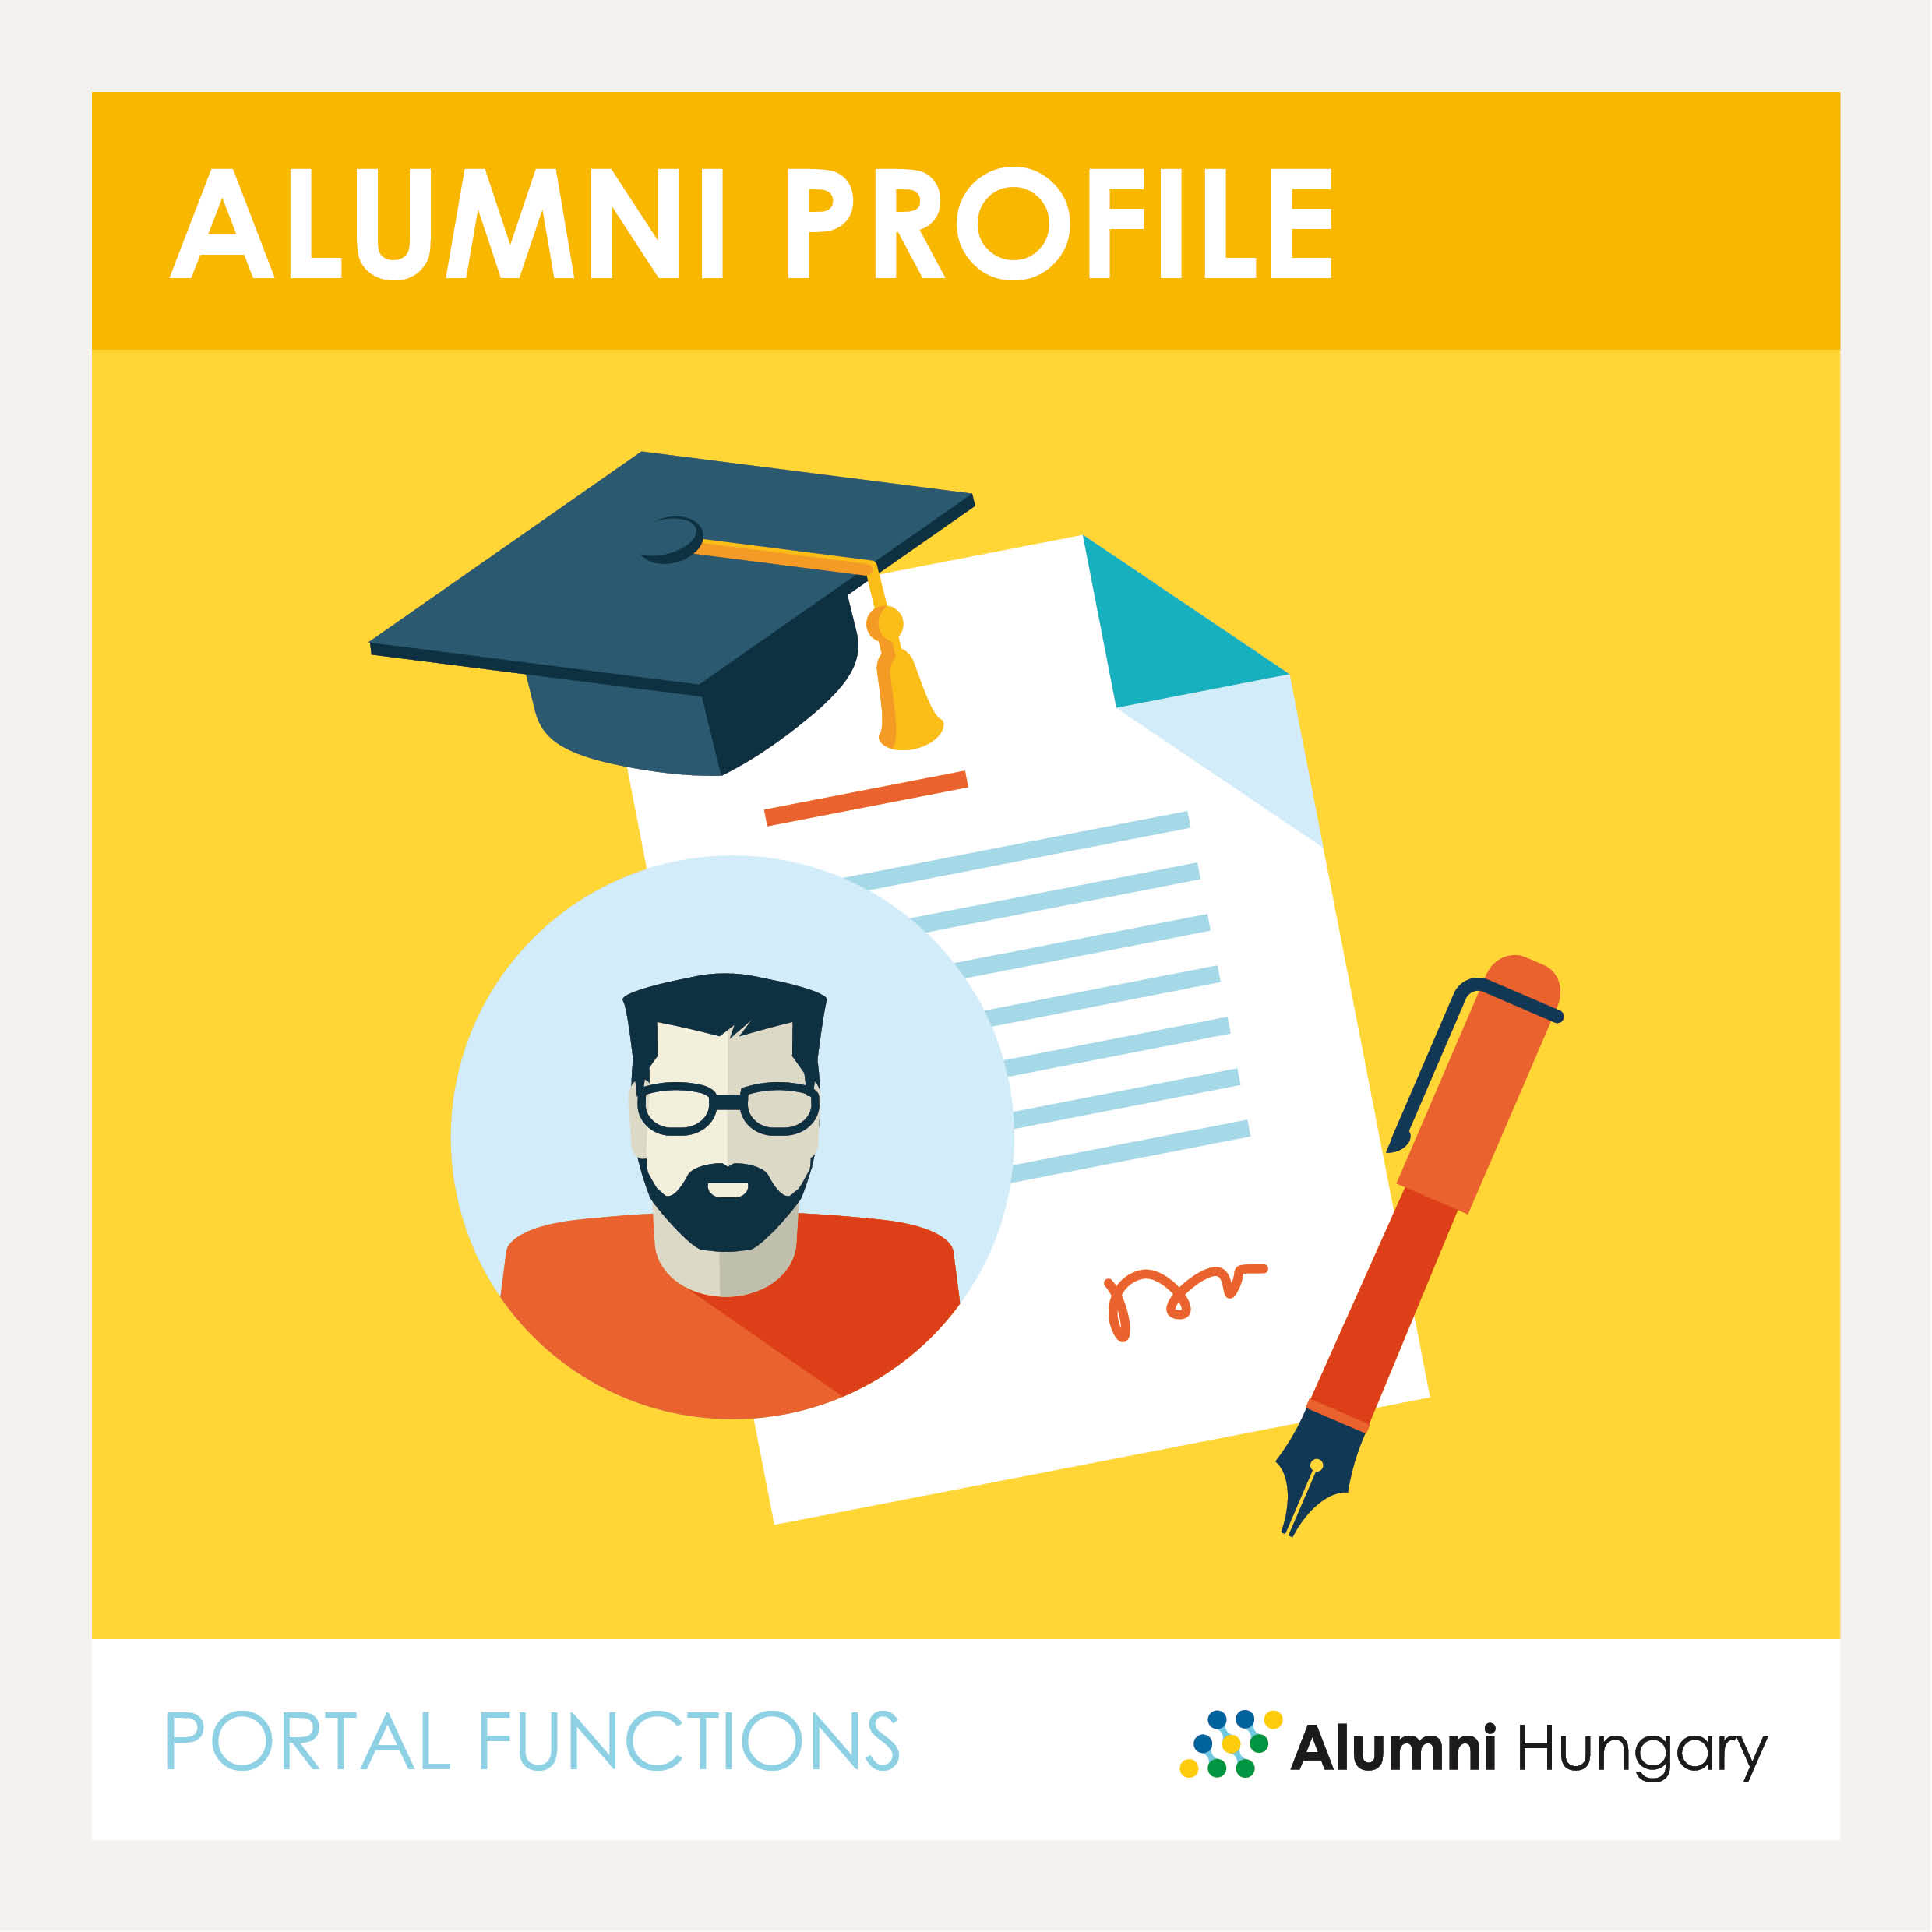 Alumni profile